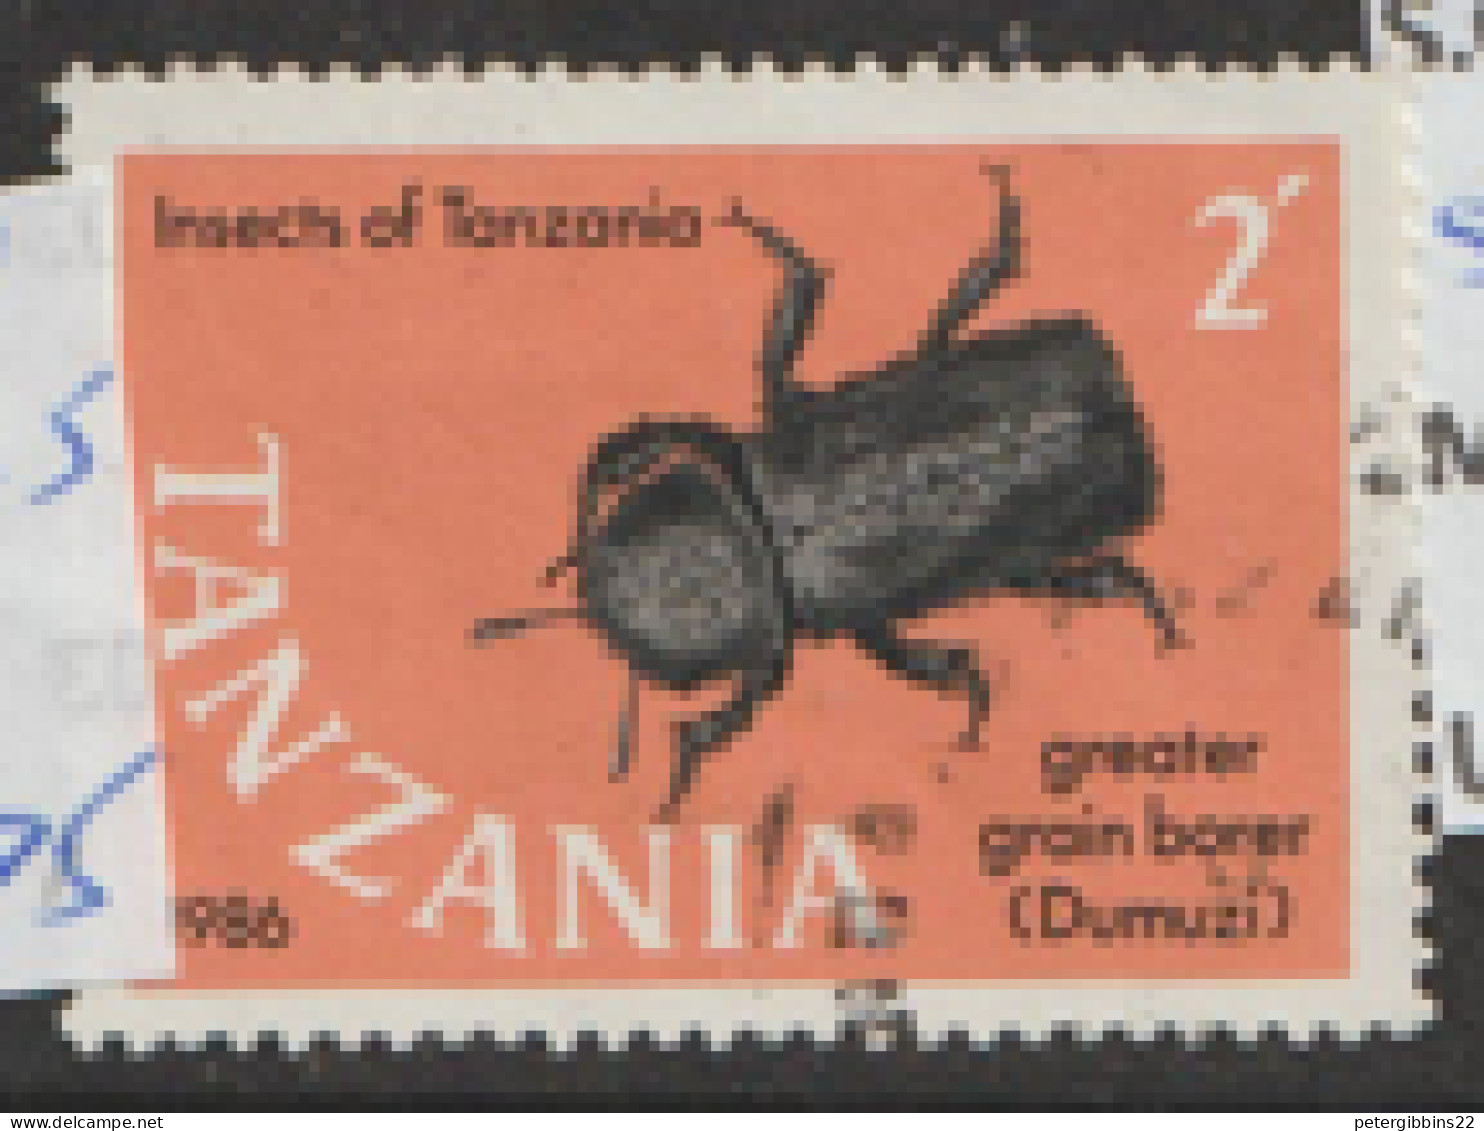 Tanzania   1987   SG 523  Insects    Fine Used - Tanzanie (1964-...)